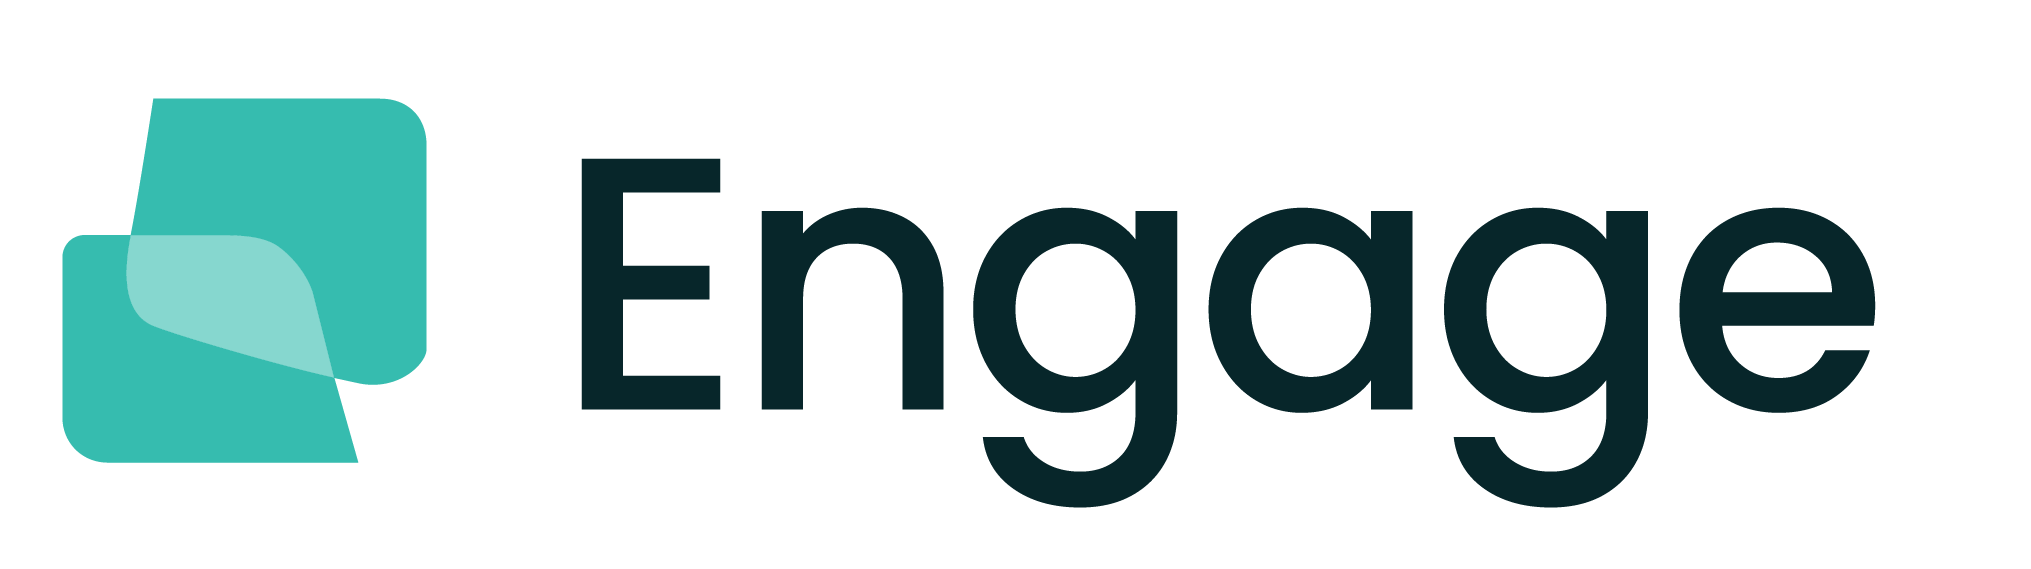 engage logo colour